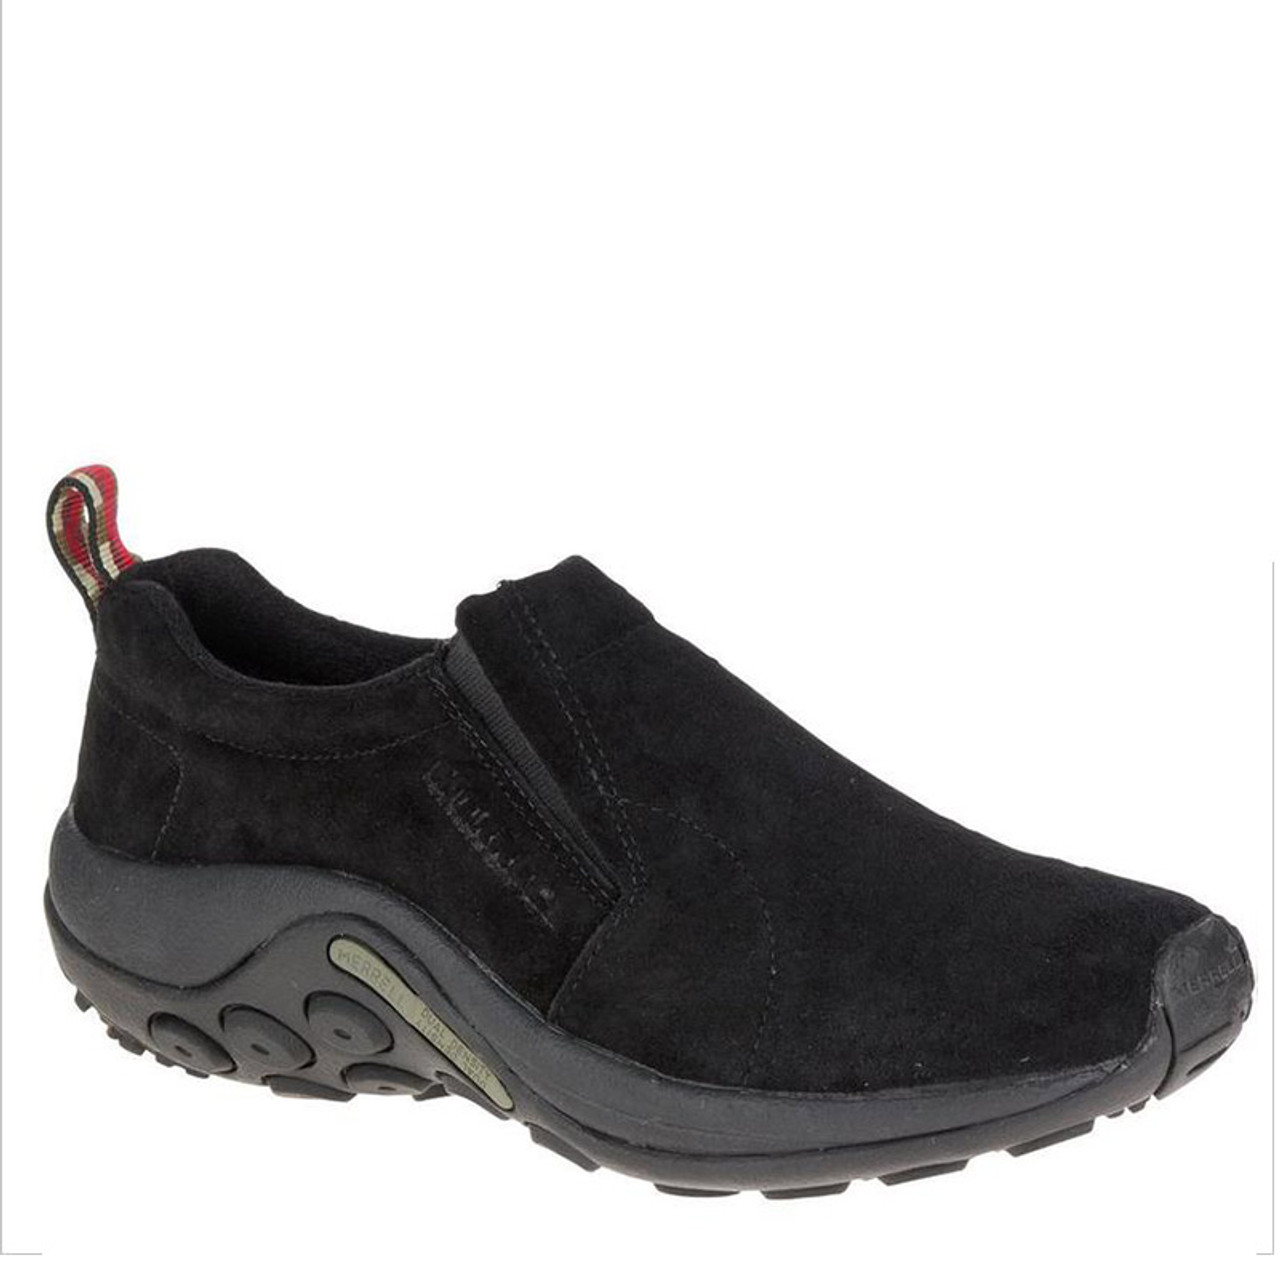 merrell black leather slip on shoes